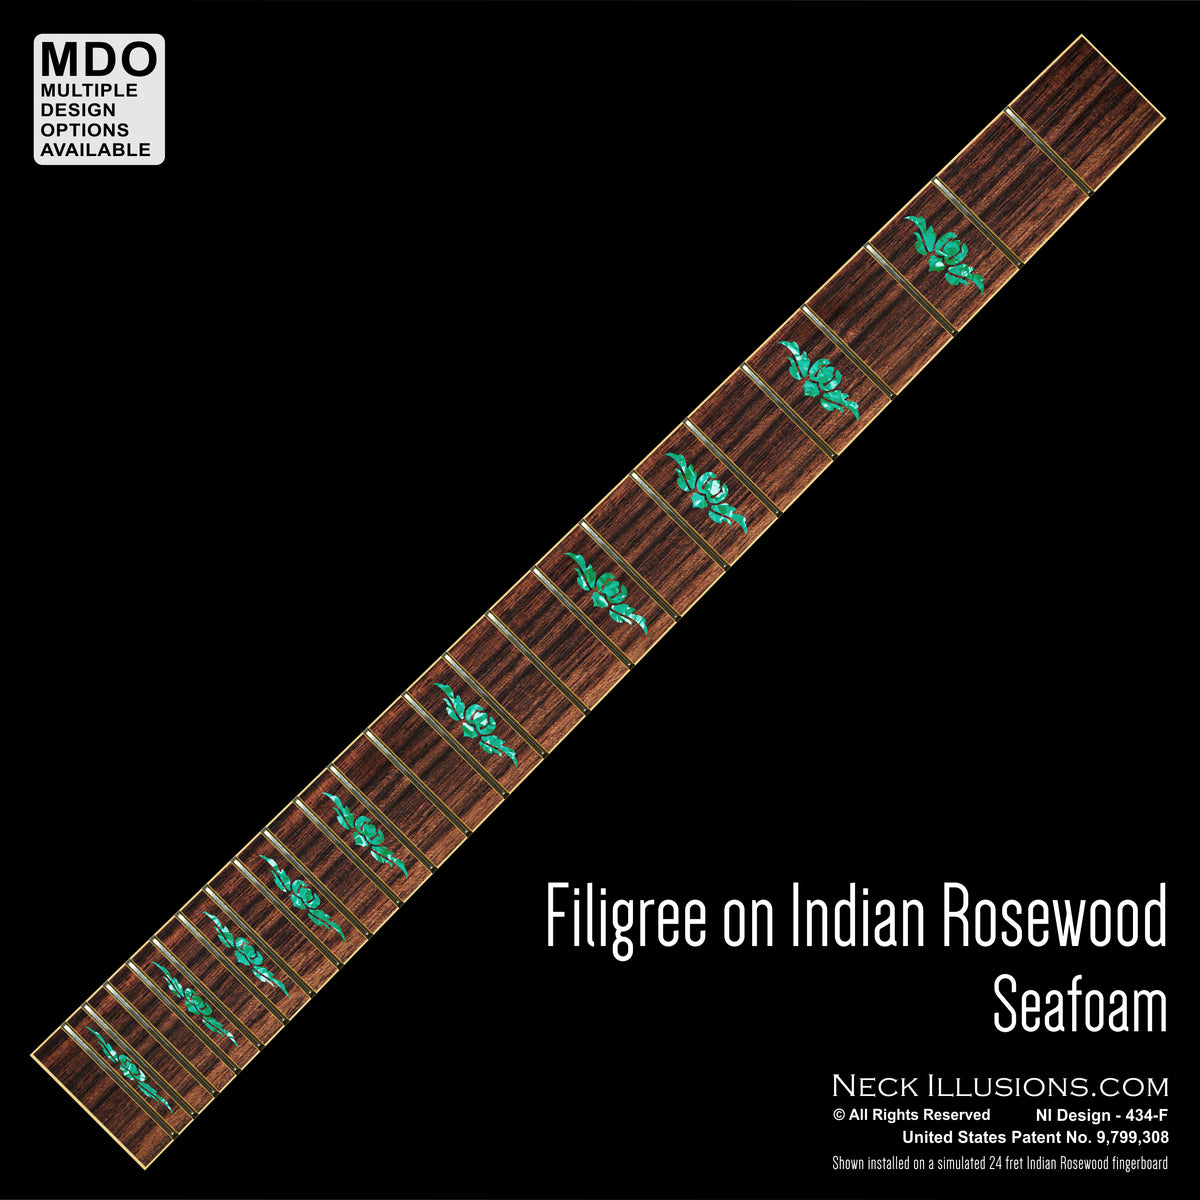 Filigree on Indian Rosewood